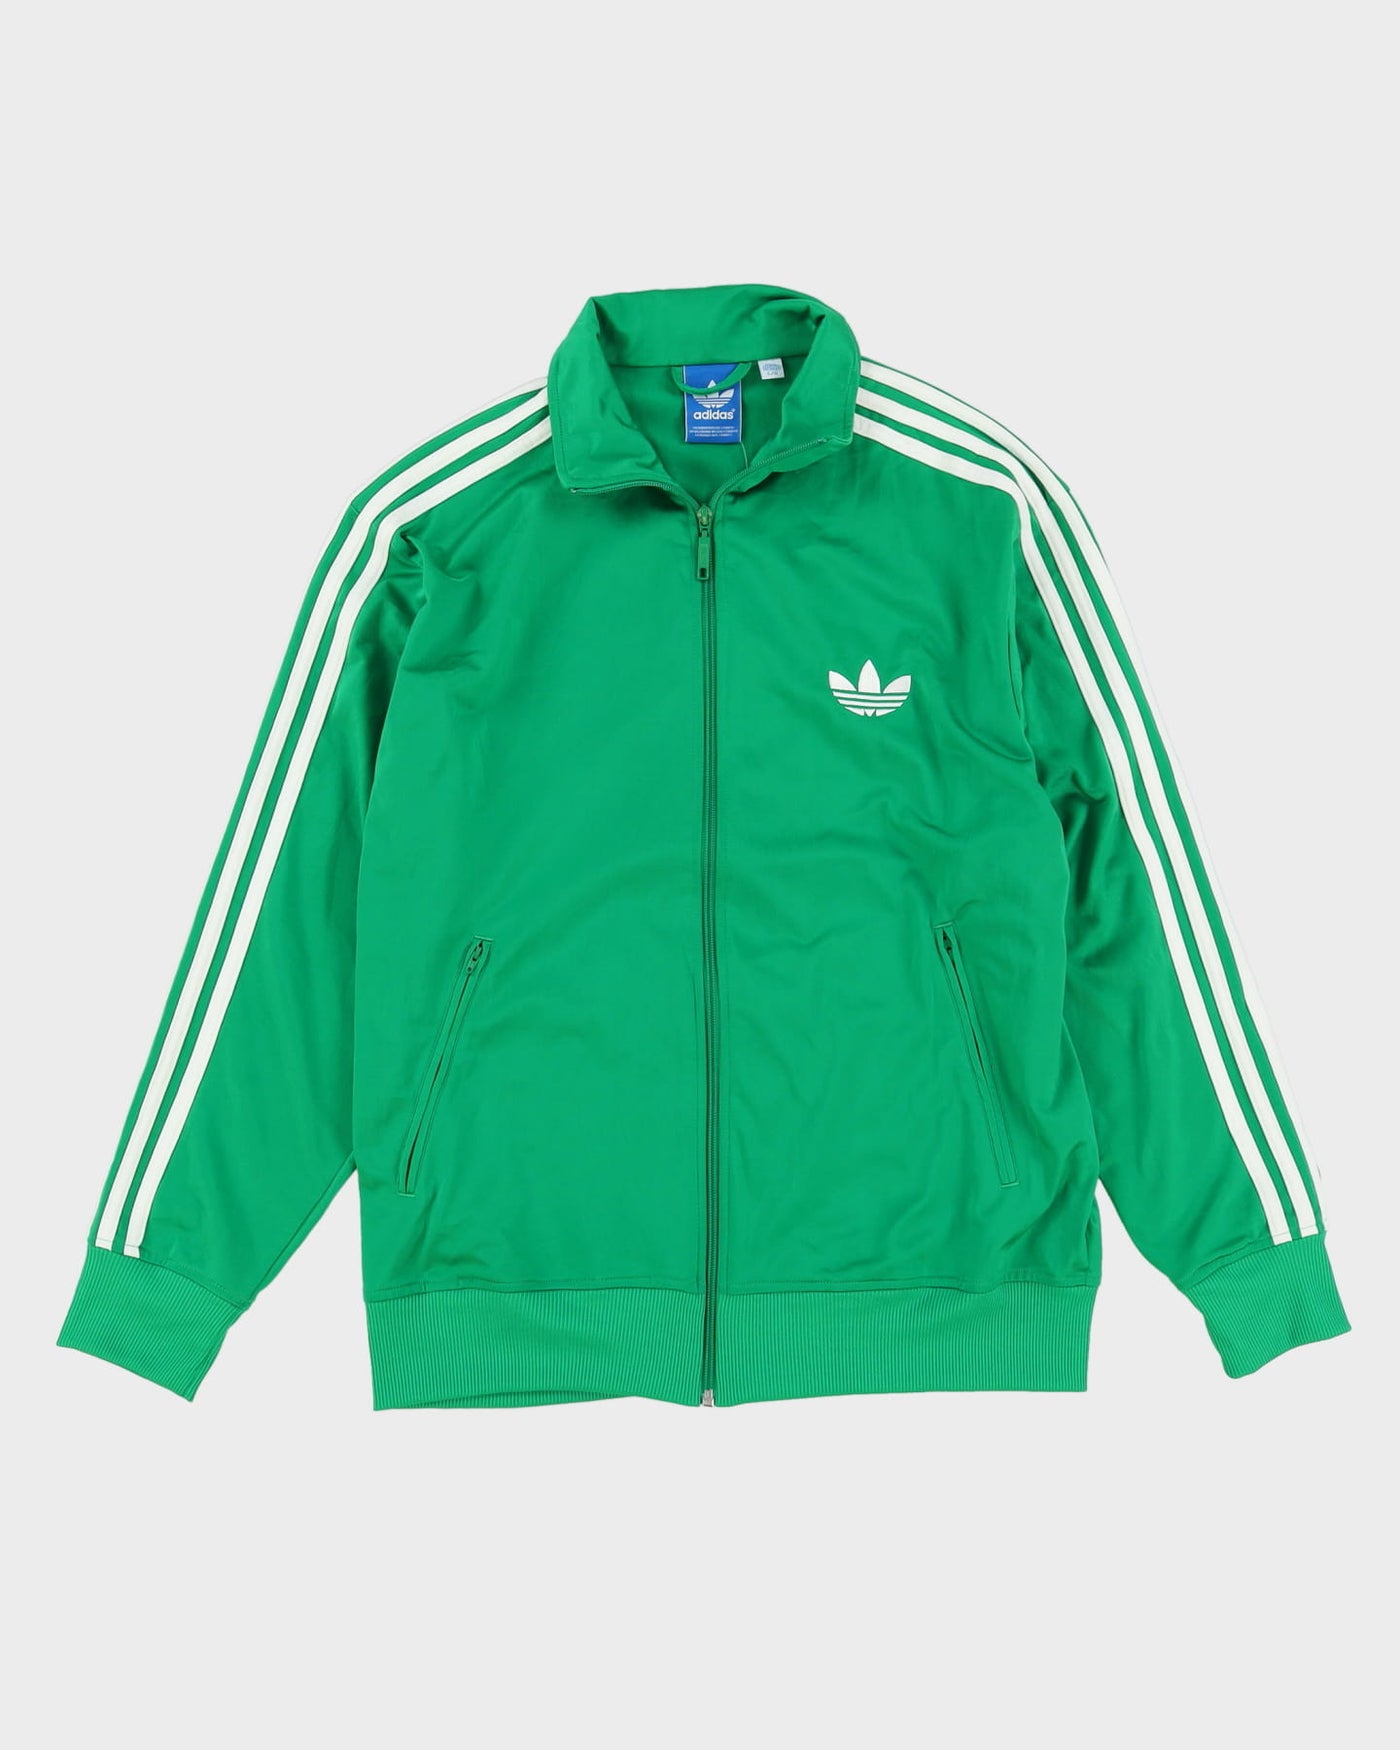 Adidas Green / White Track Jacket - L